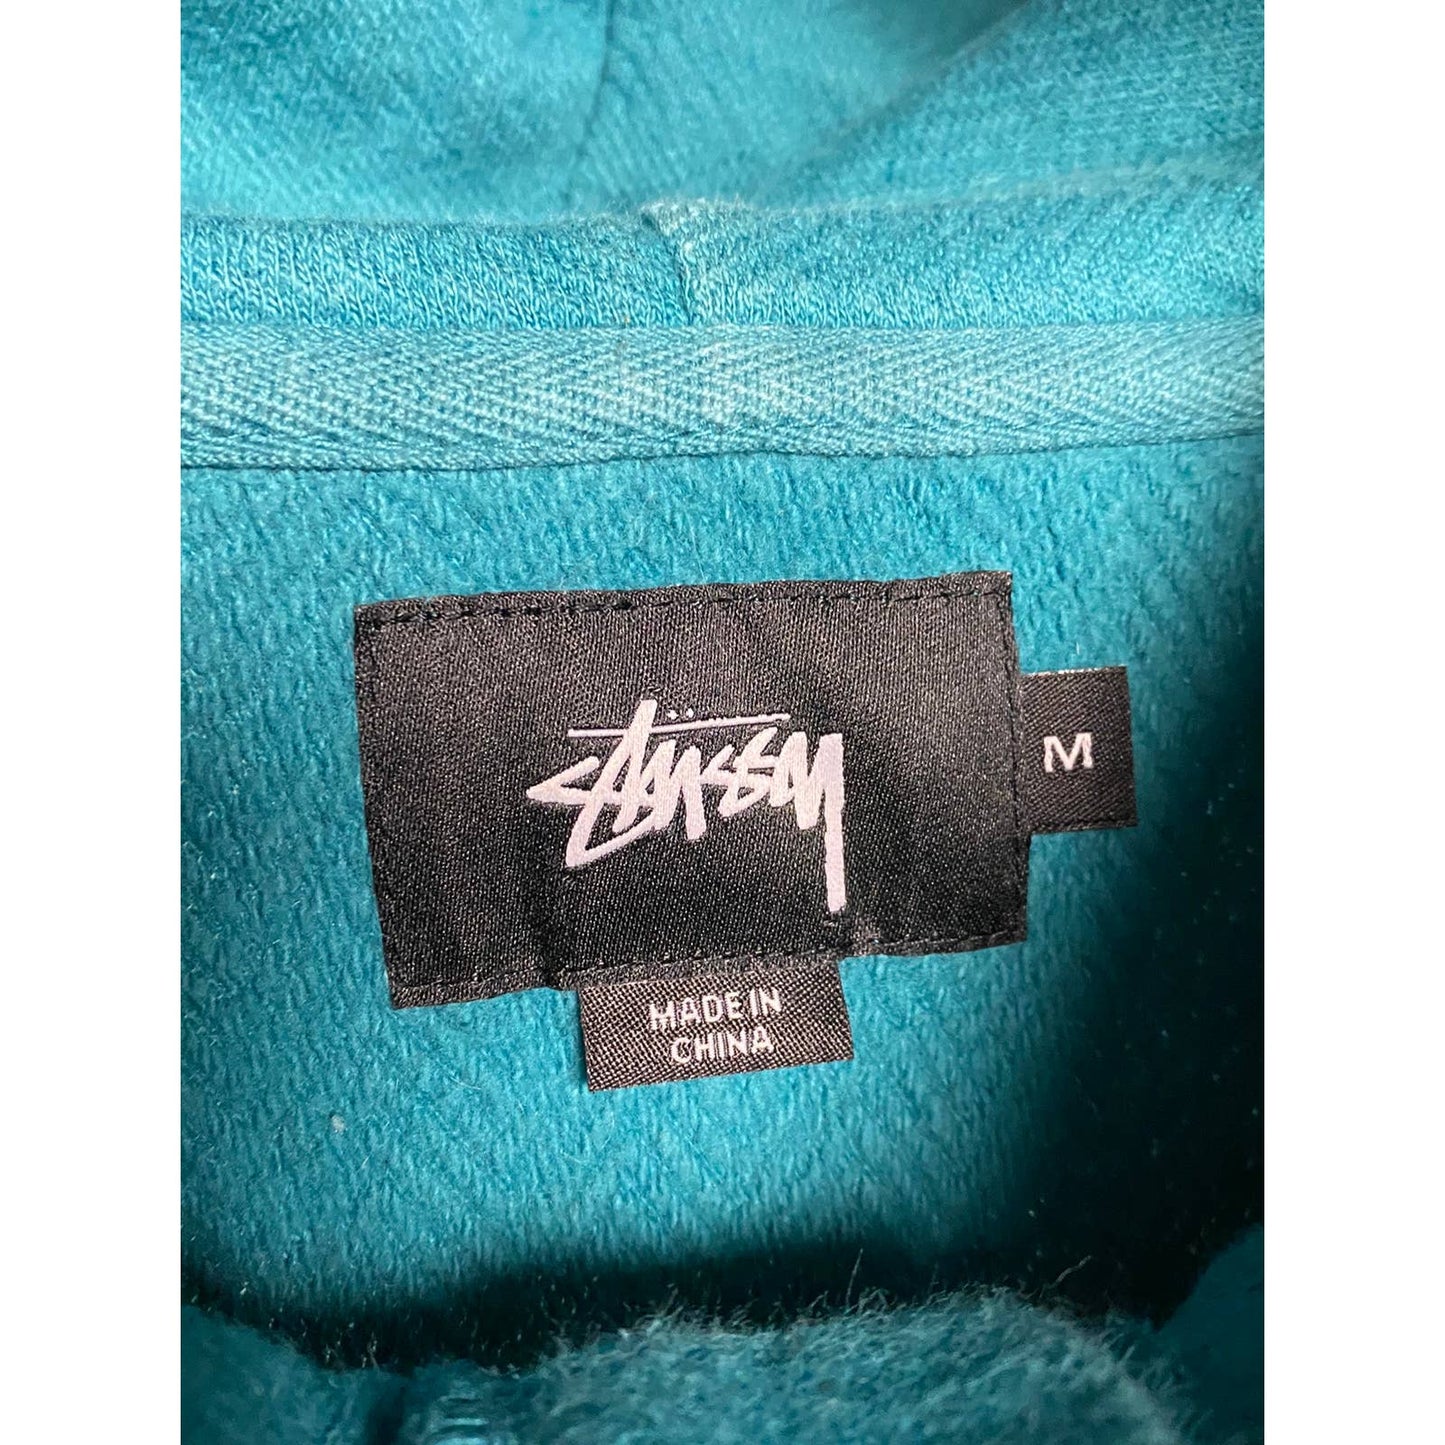 Stussy big logo hoodie quarter zip turquoise